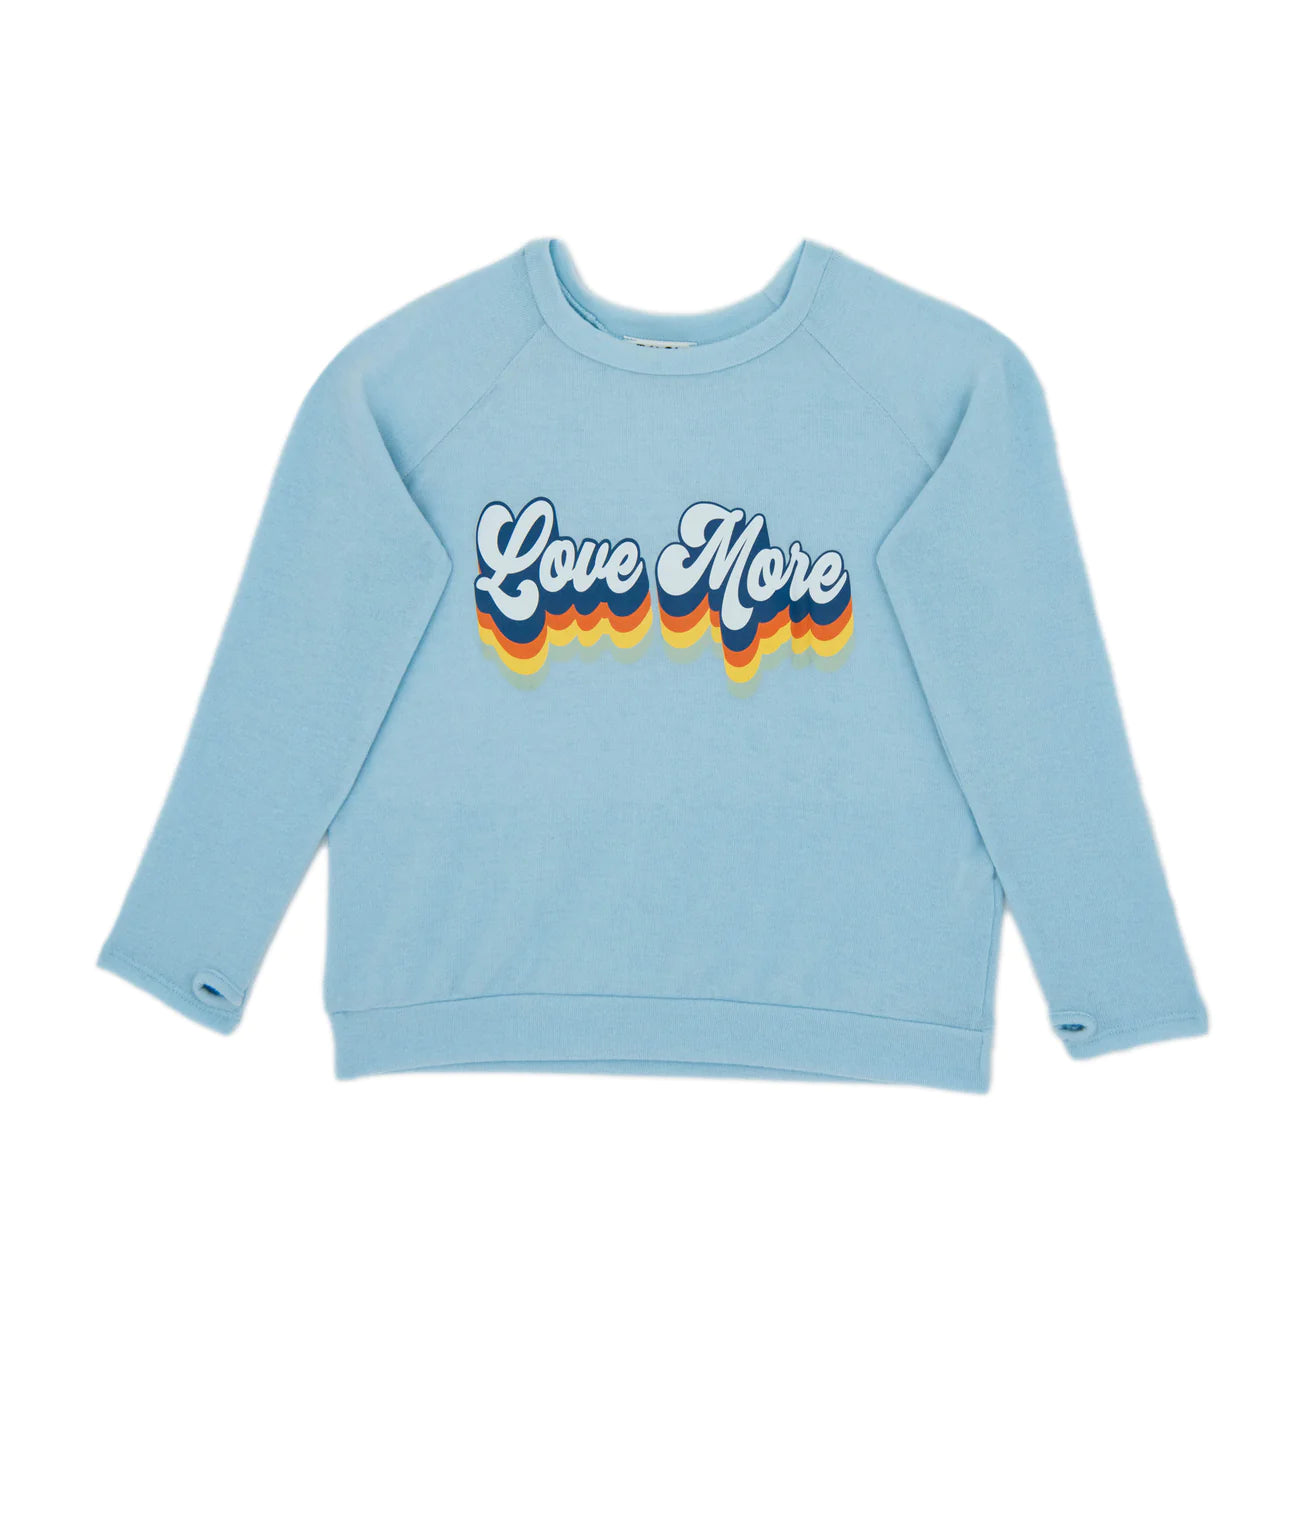 Light Blue Love More Sweatshirt 160 GIRLS APPAREL TWEEN 7-16 Rock Candy 7/8 